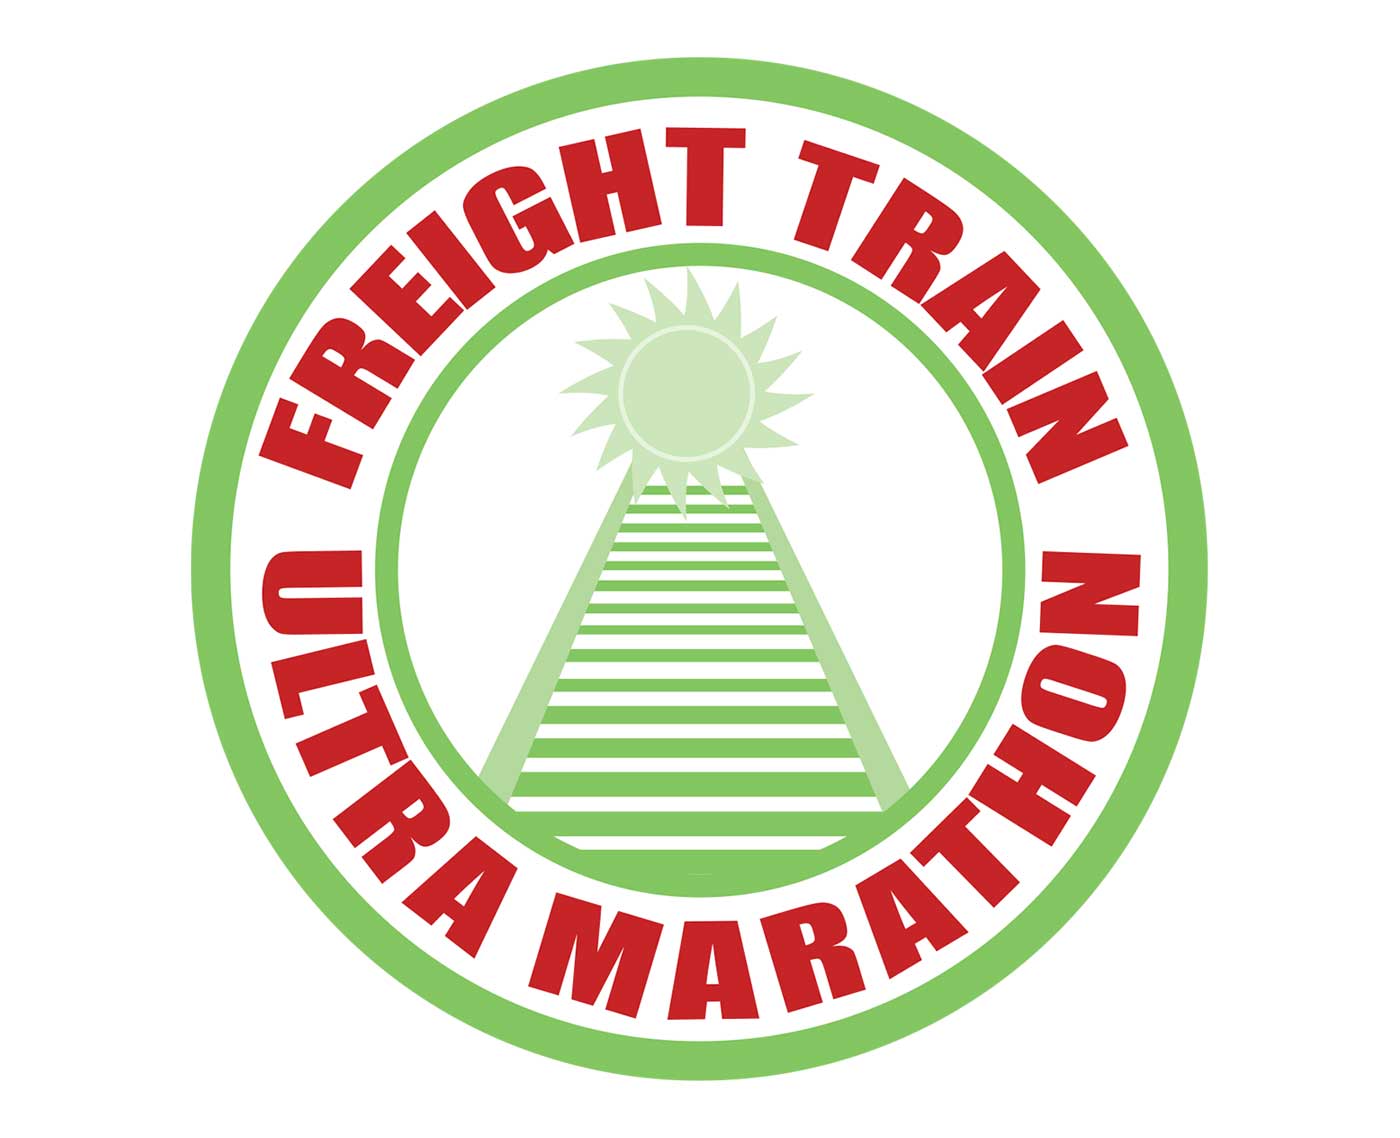 Freight Train Ultra Marathon